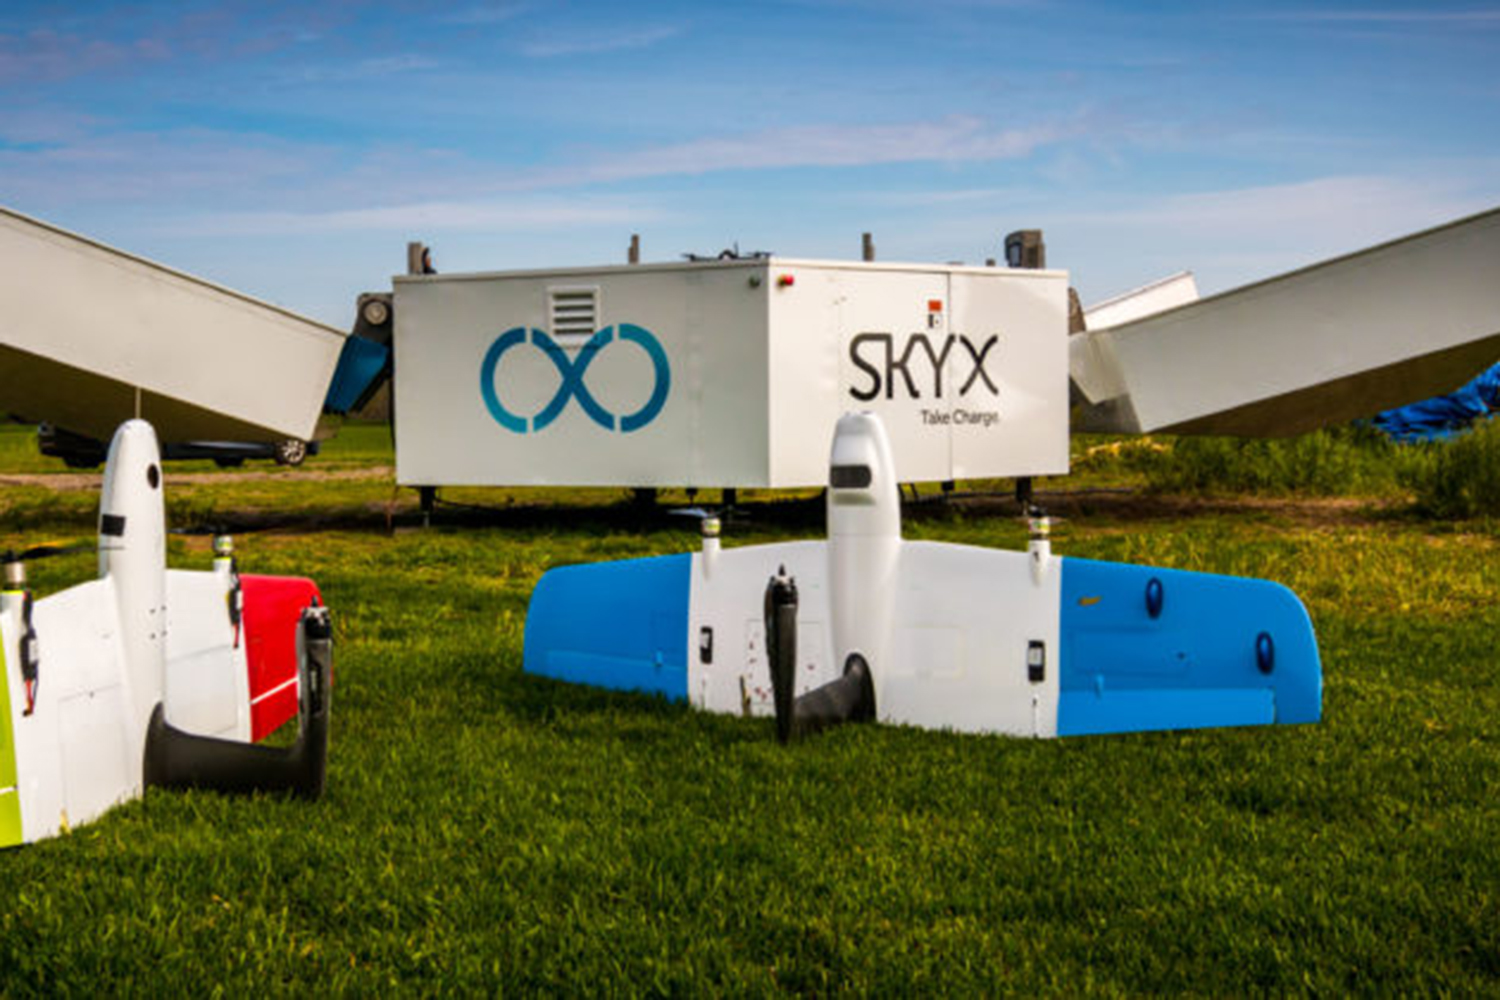 xstation drone charing skyone skyx1